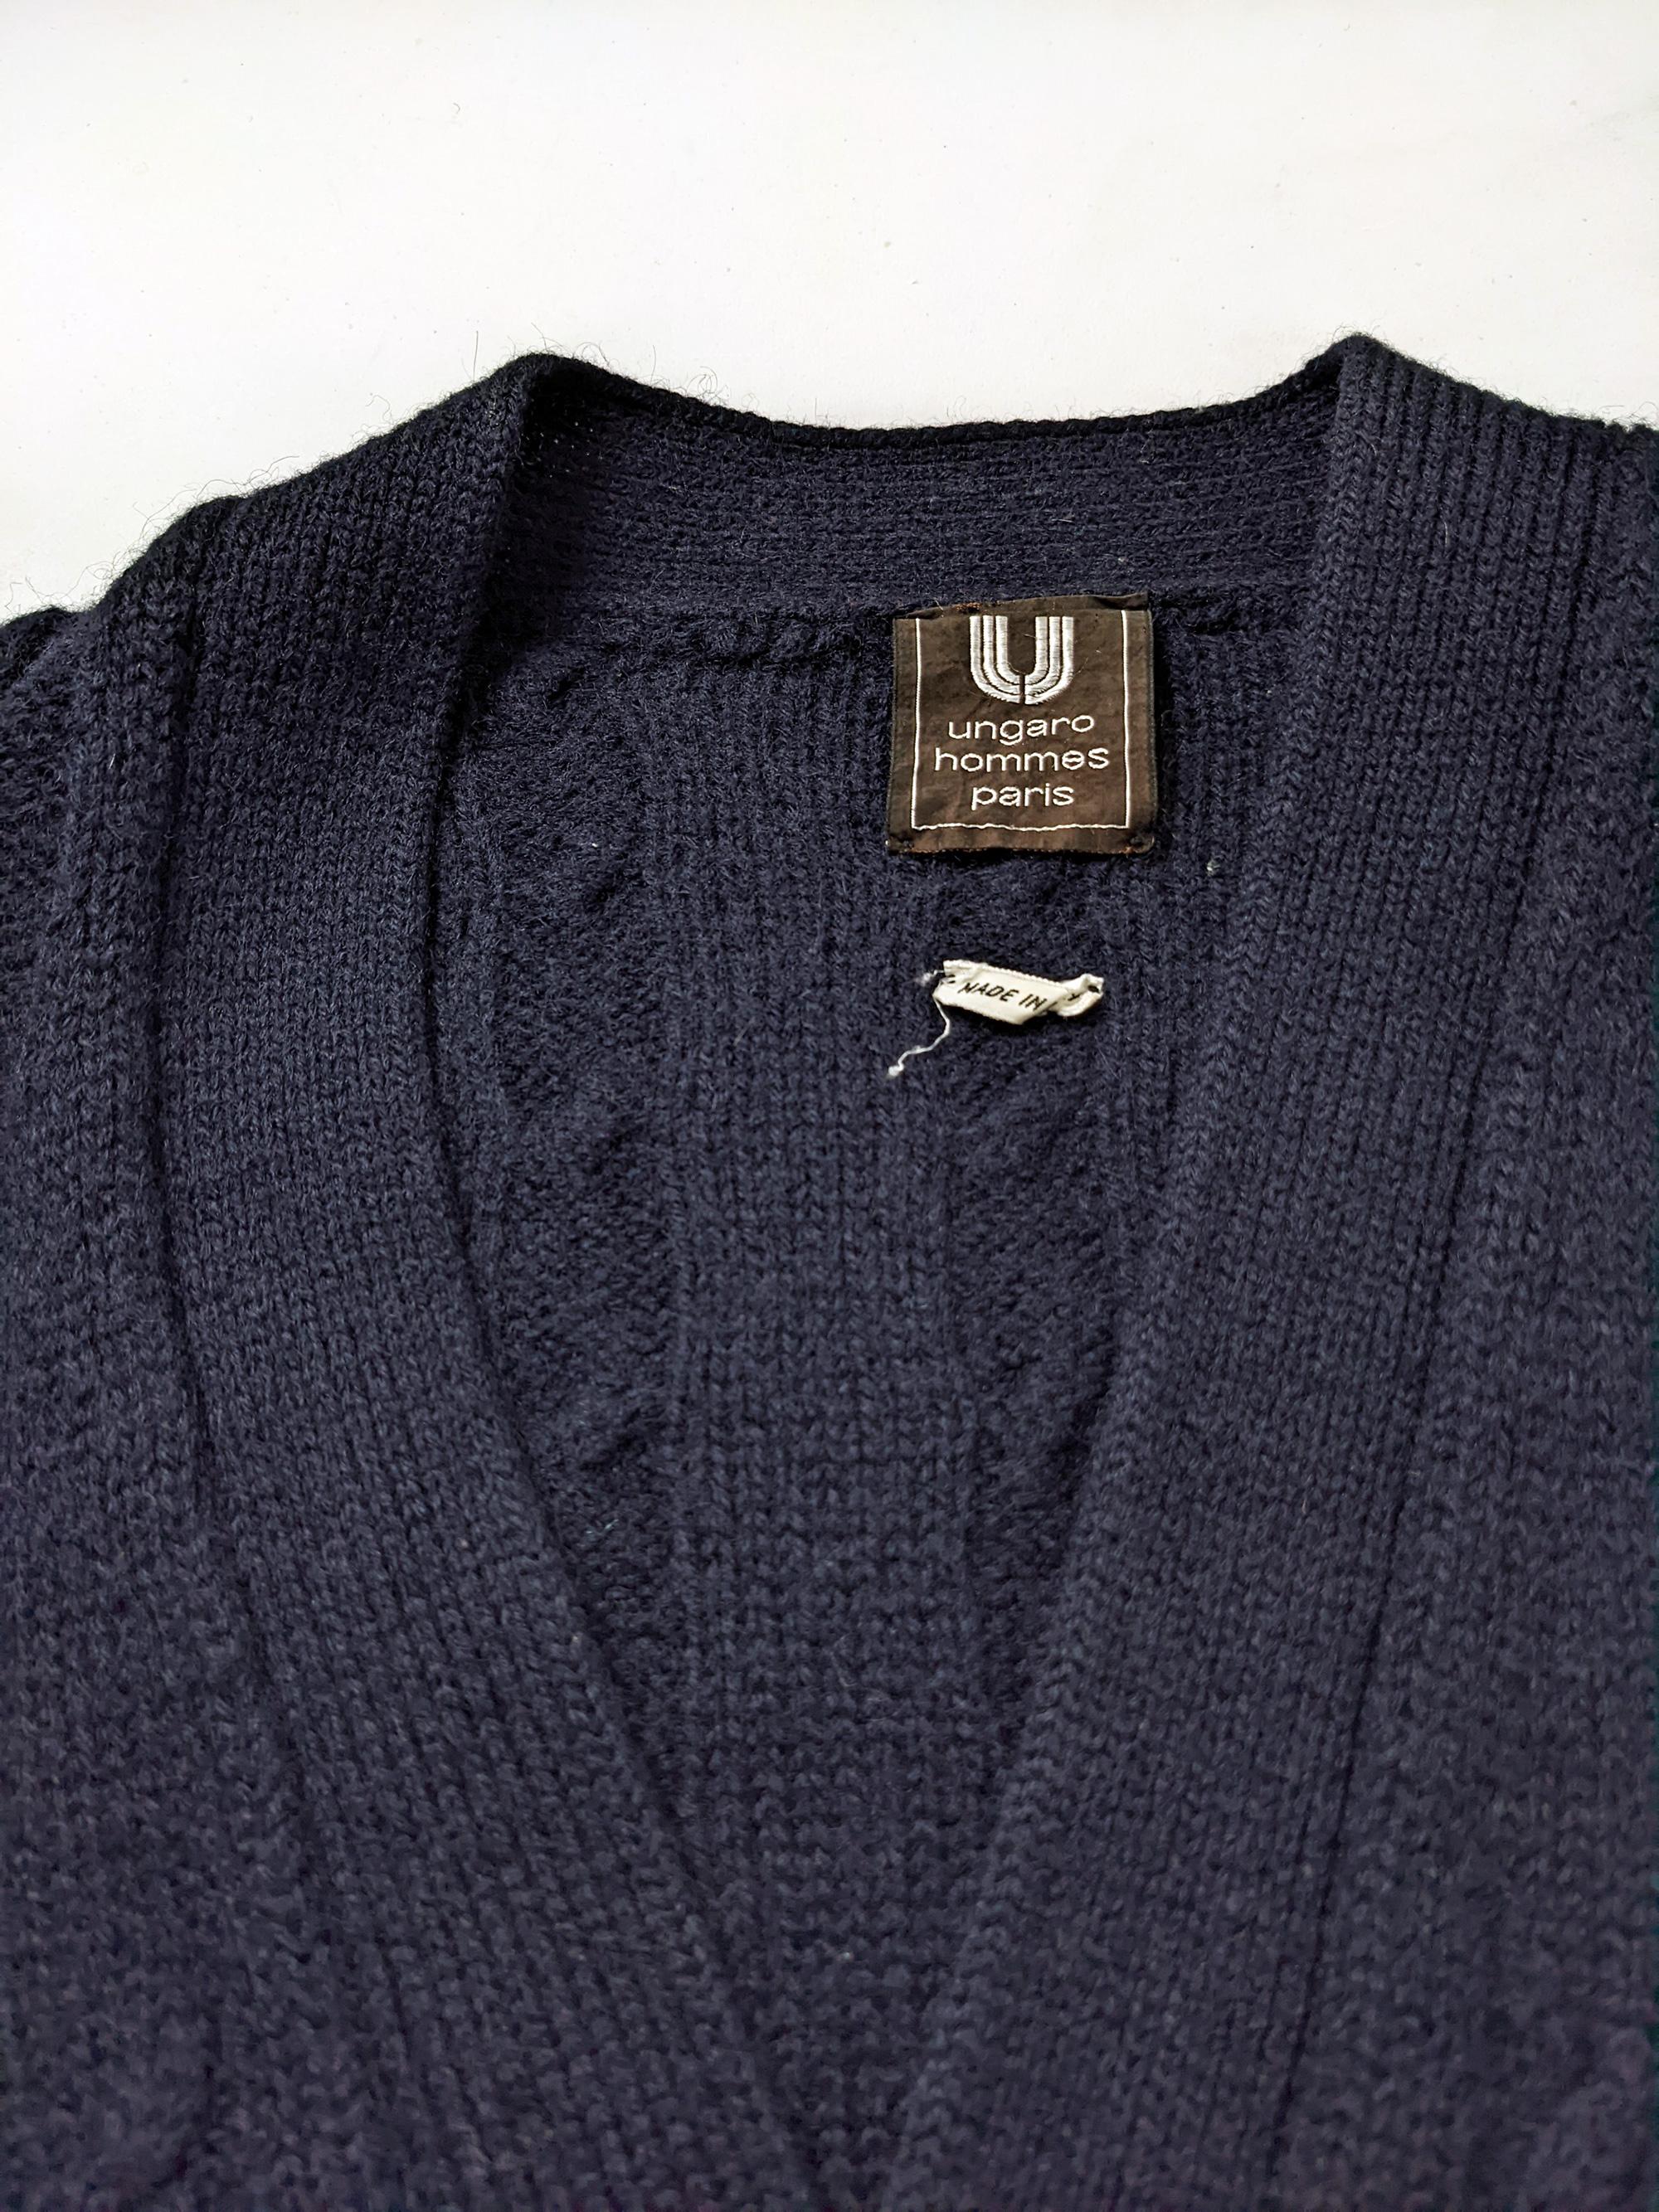 Men's Emanuel Ungaro Mens Vintage Dark Blue Wool Cable Knit Cardigan Sweater, 1980s